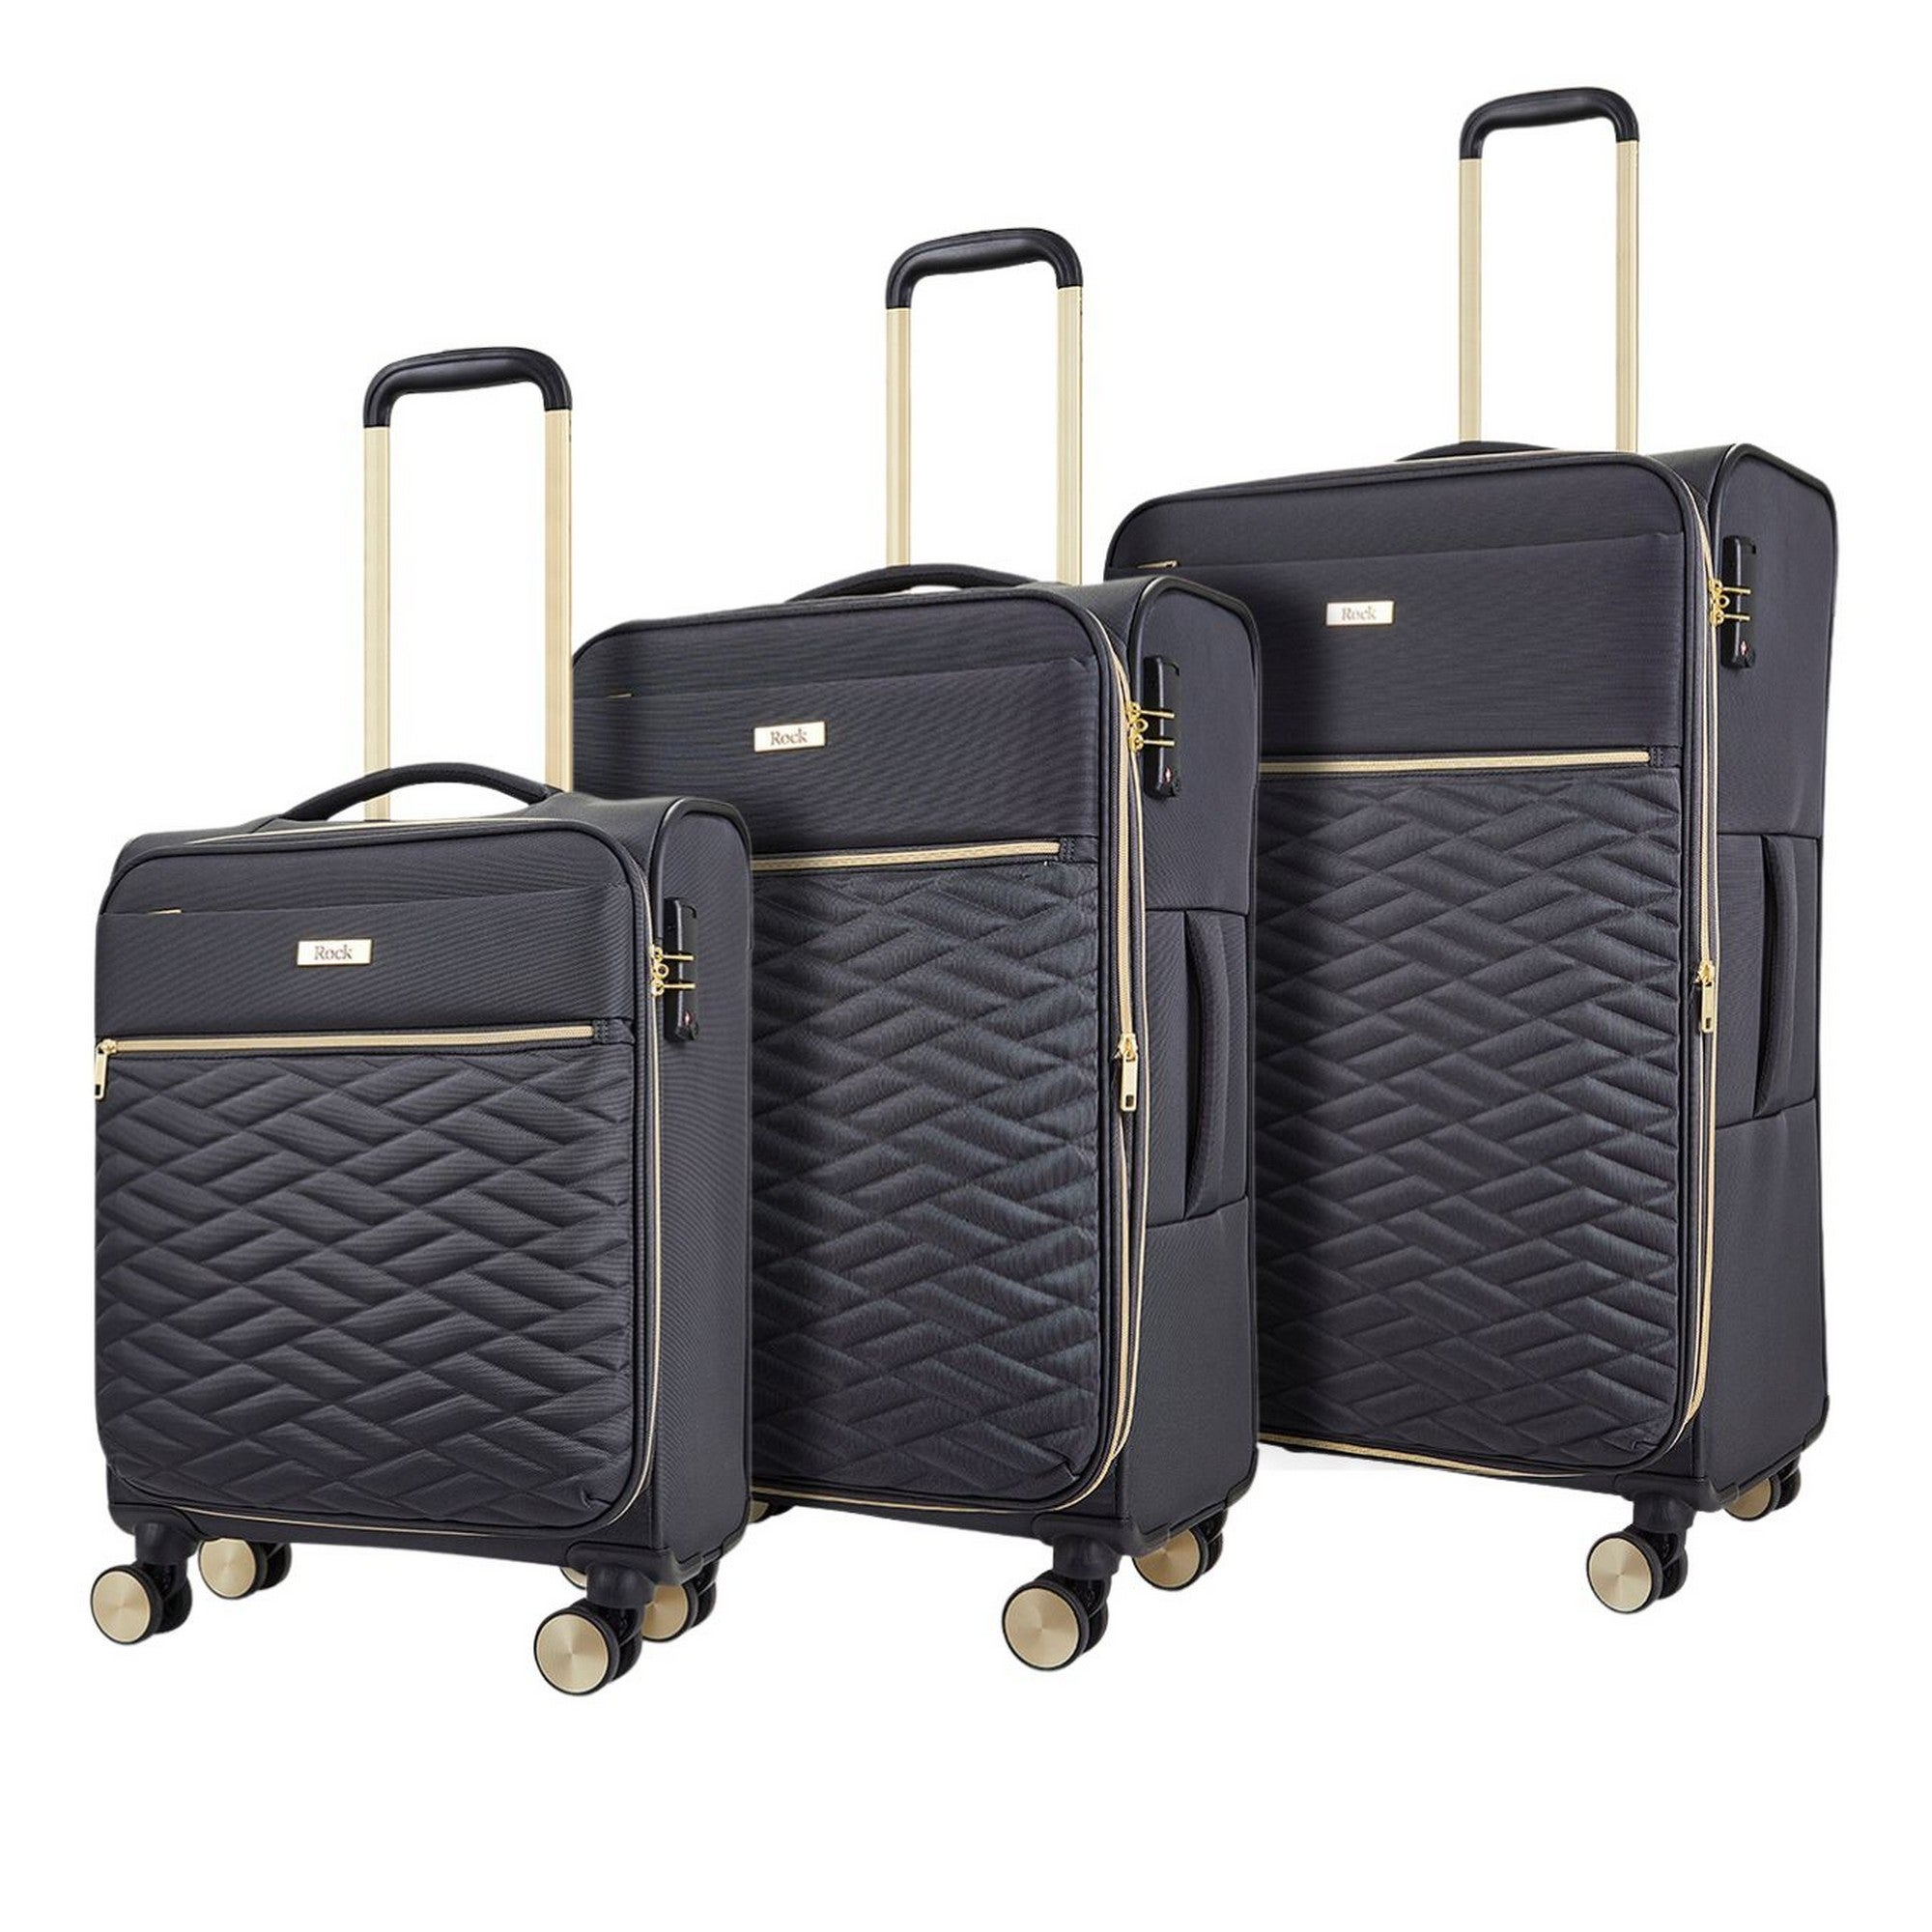 Rock Luggage Sloane Set of 3 Suitcases Charcoal